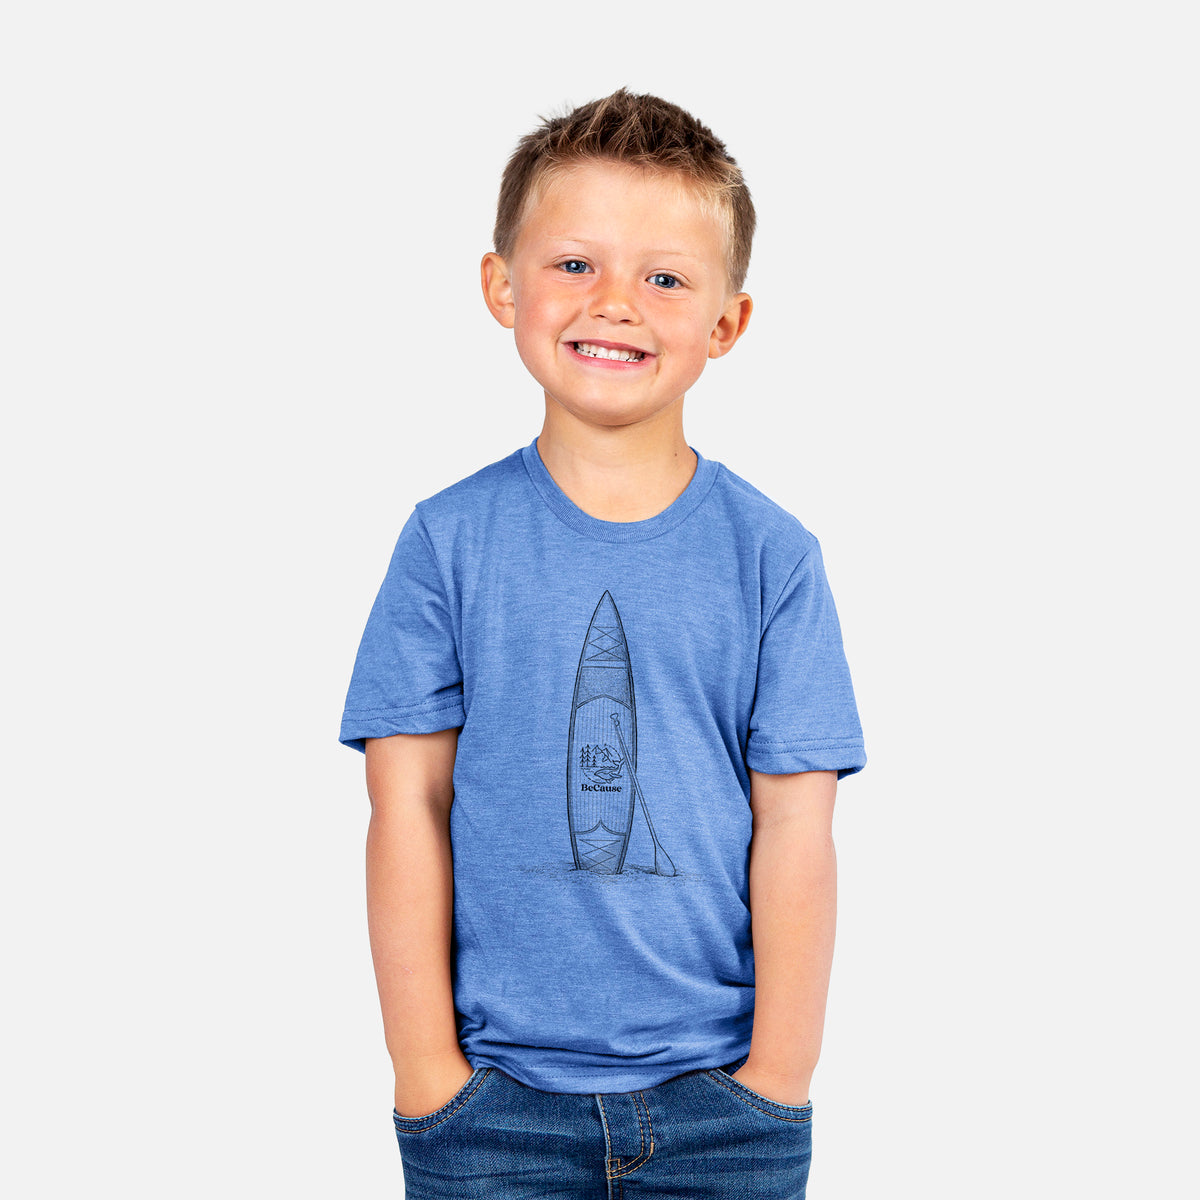 Stand-up Paddle Board - Kids Shirt